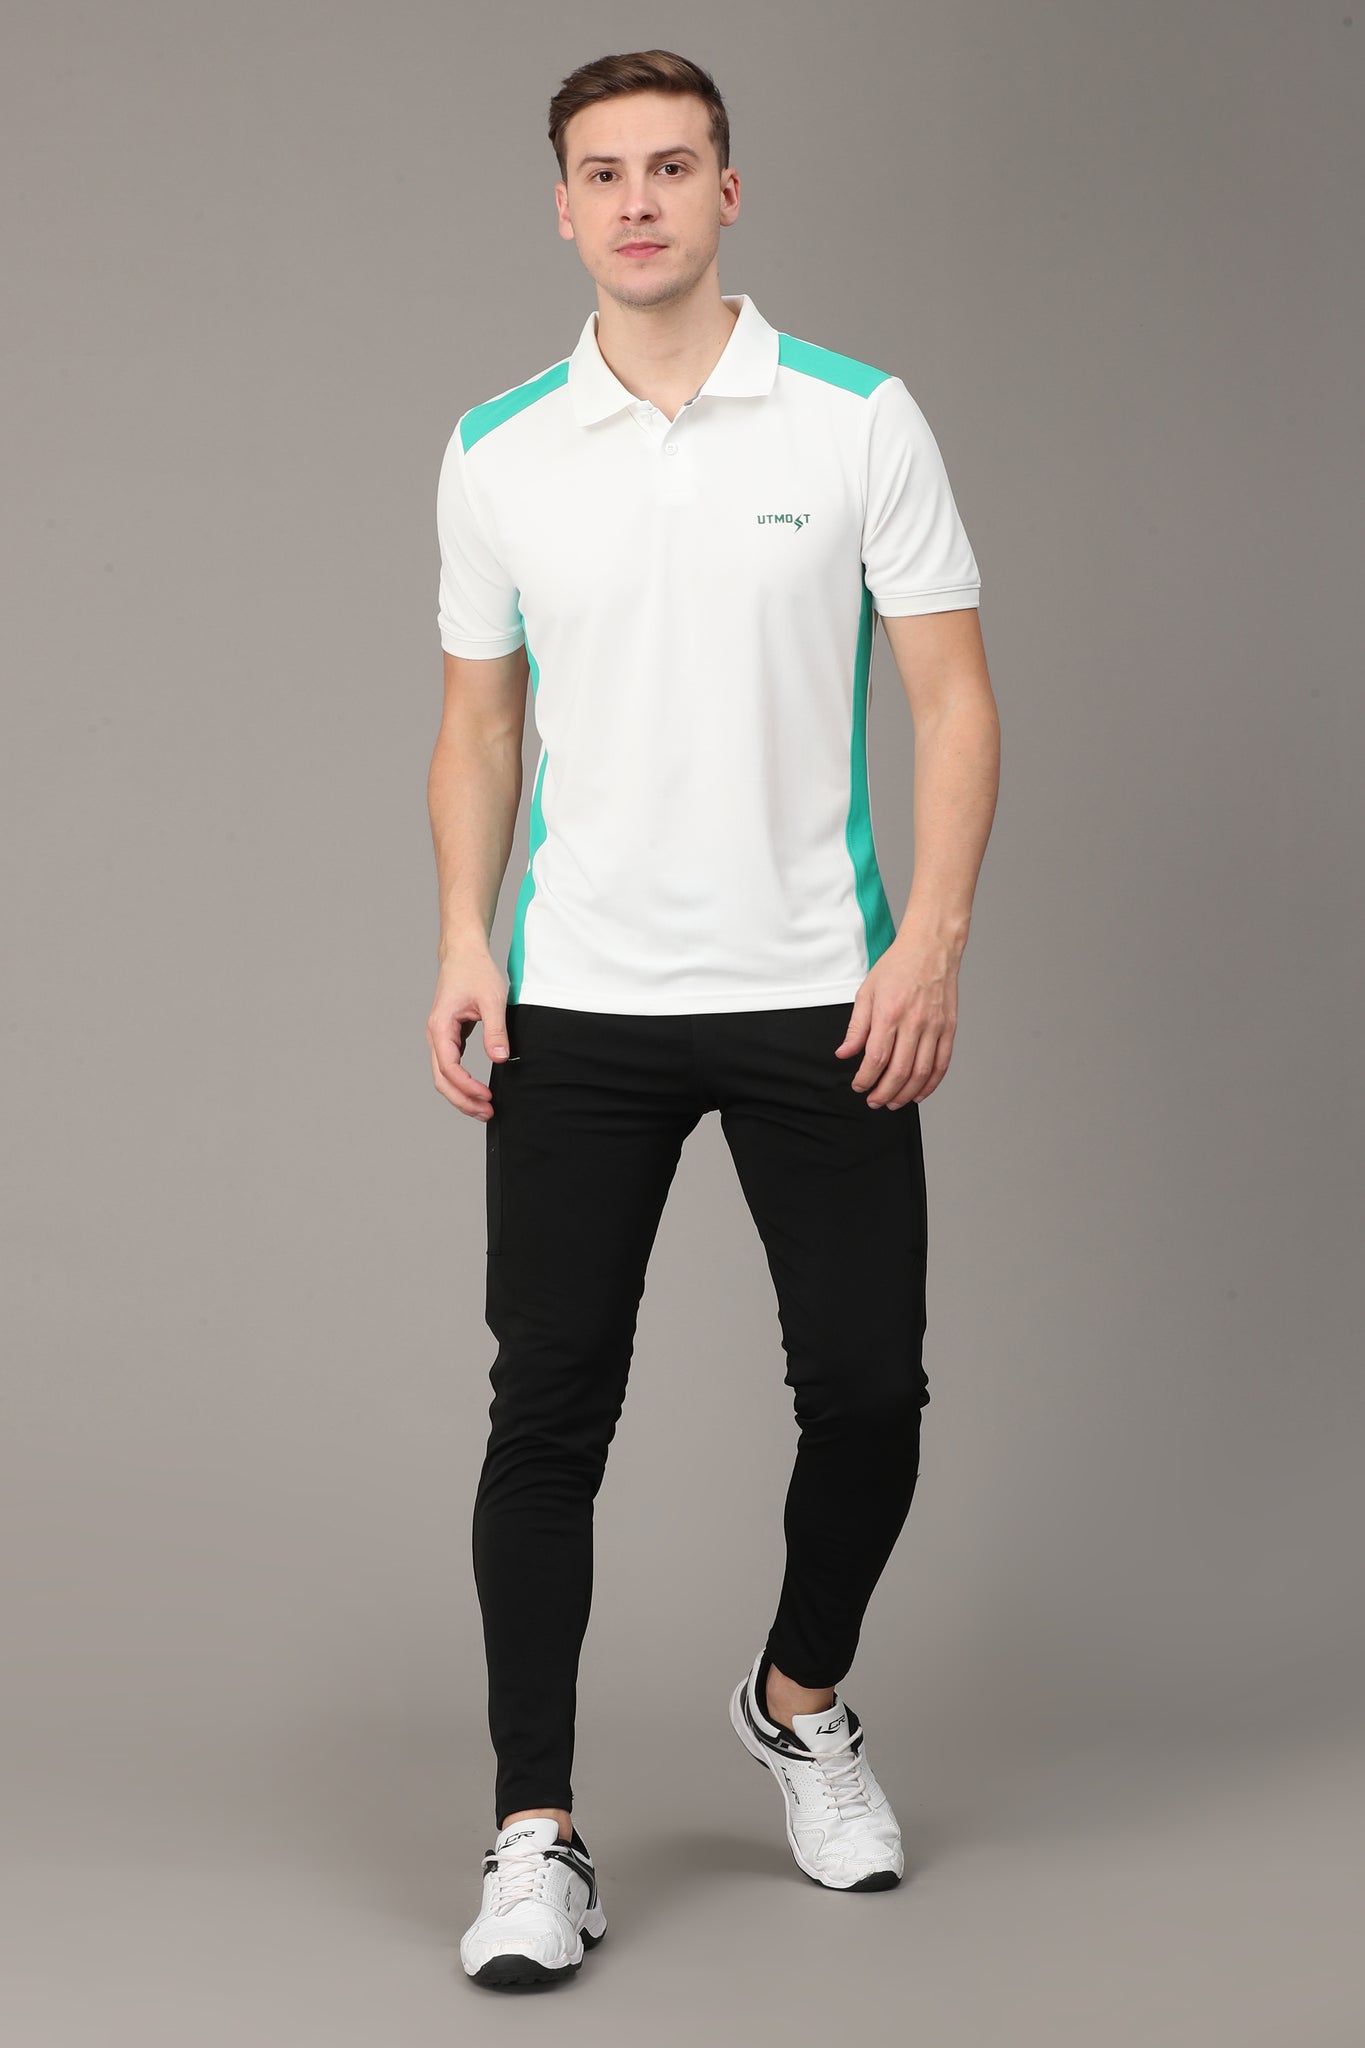 Green Strip on White Polo T-Shirt